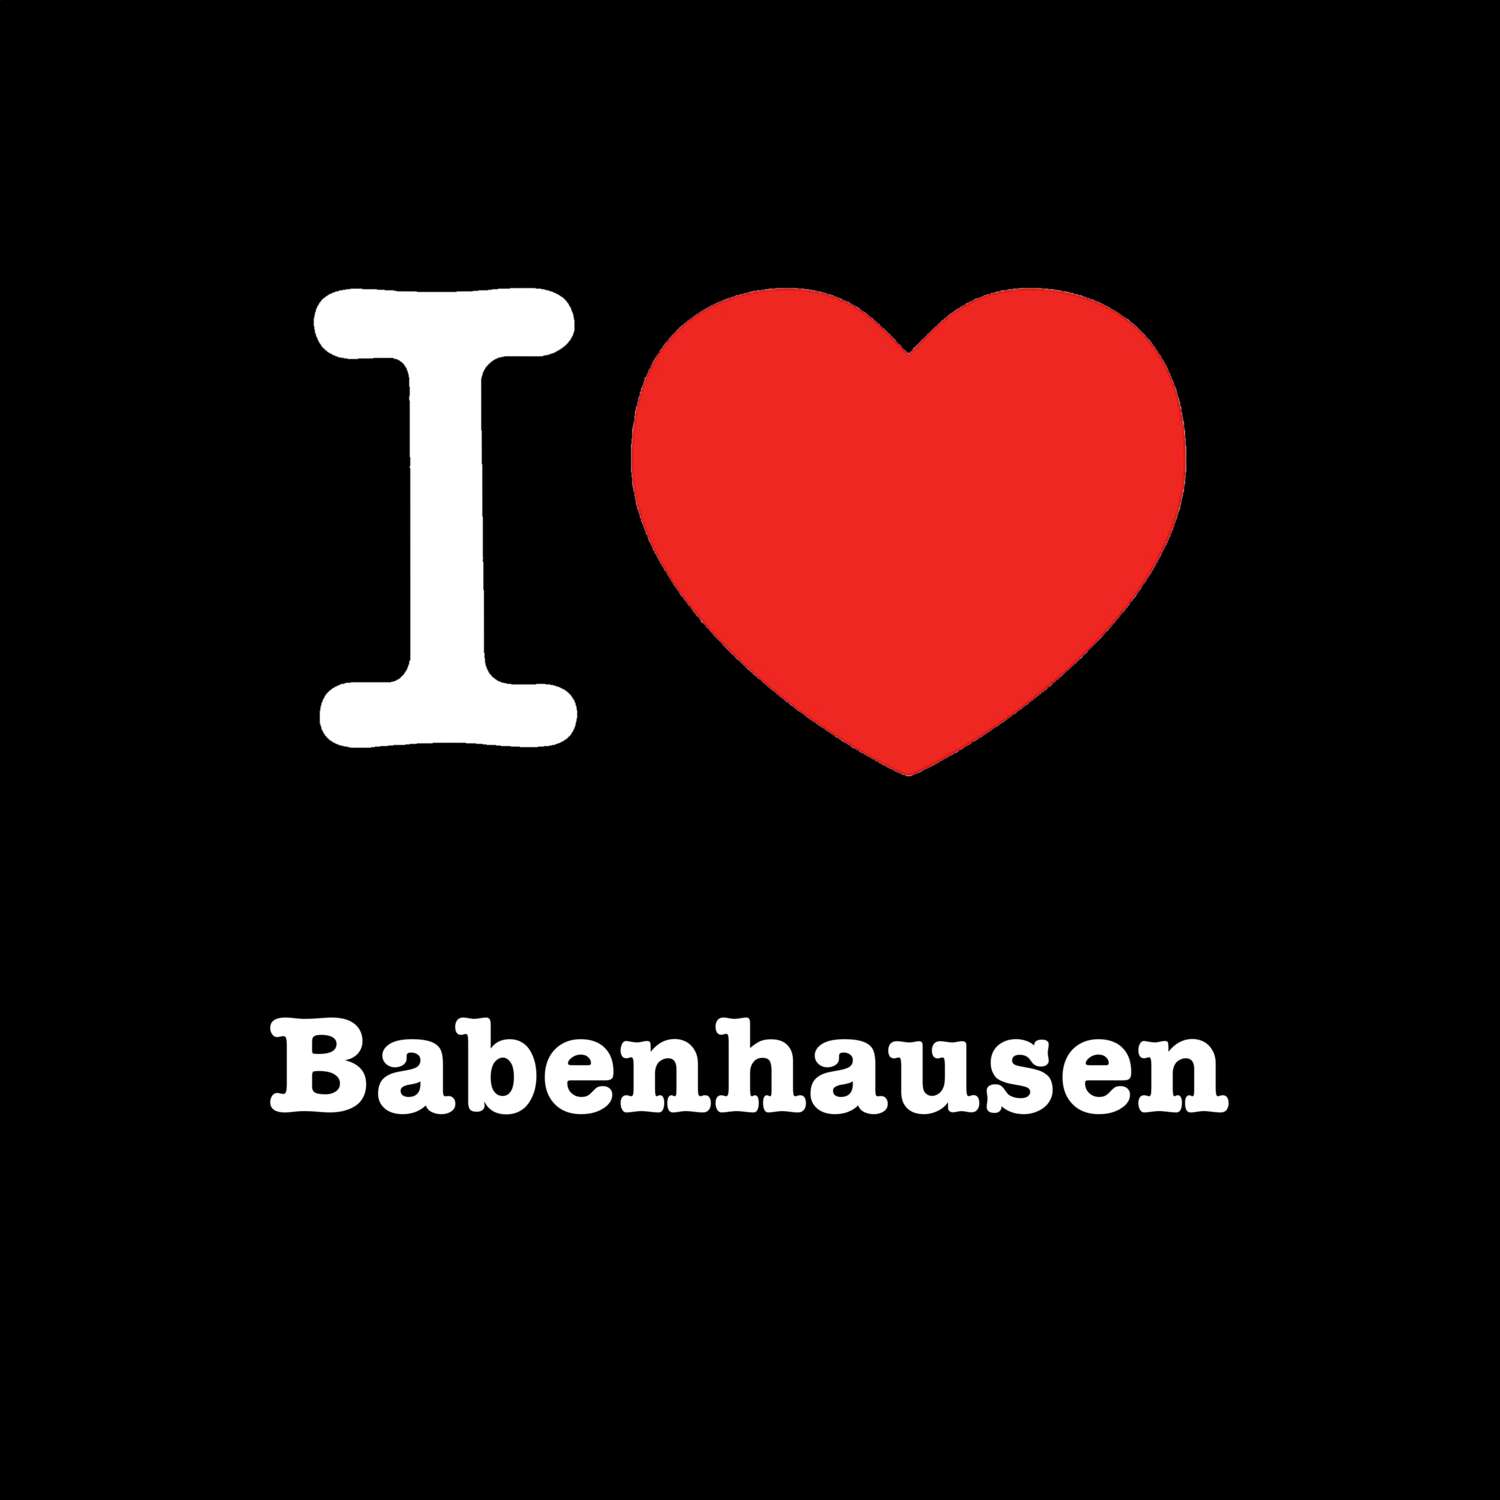 Babenhausen T-Shirt »I love«